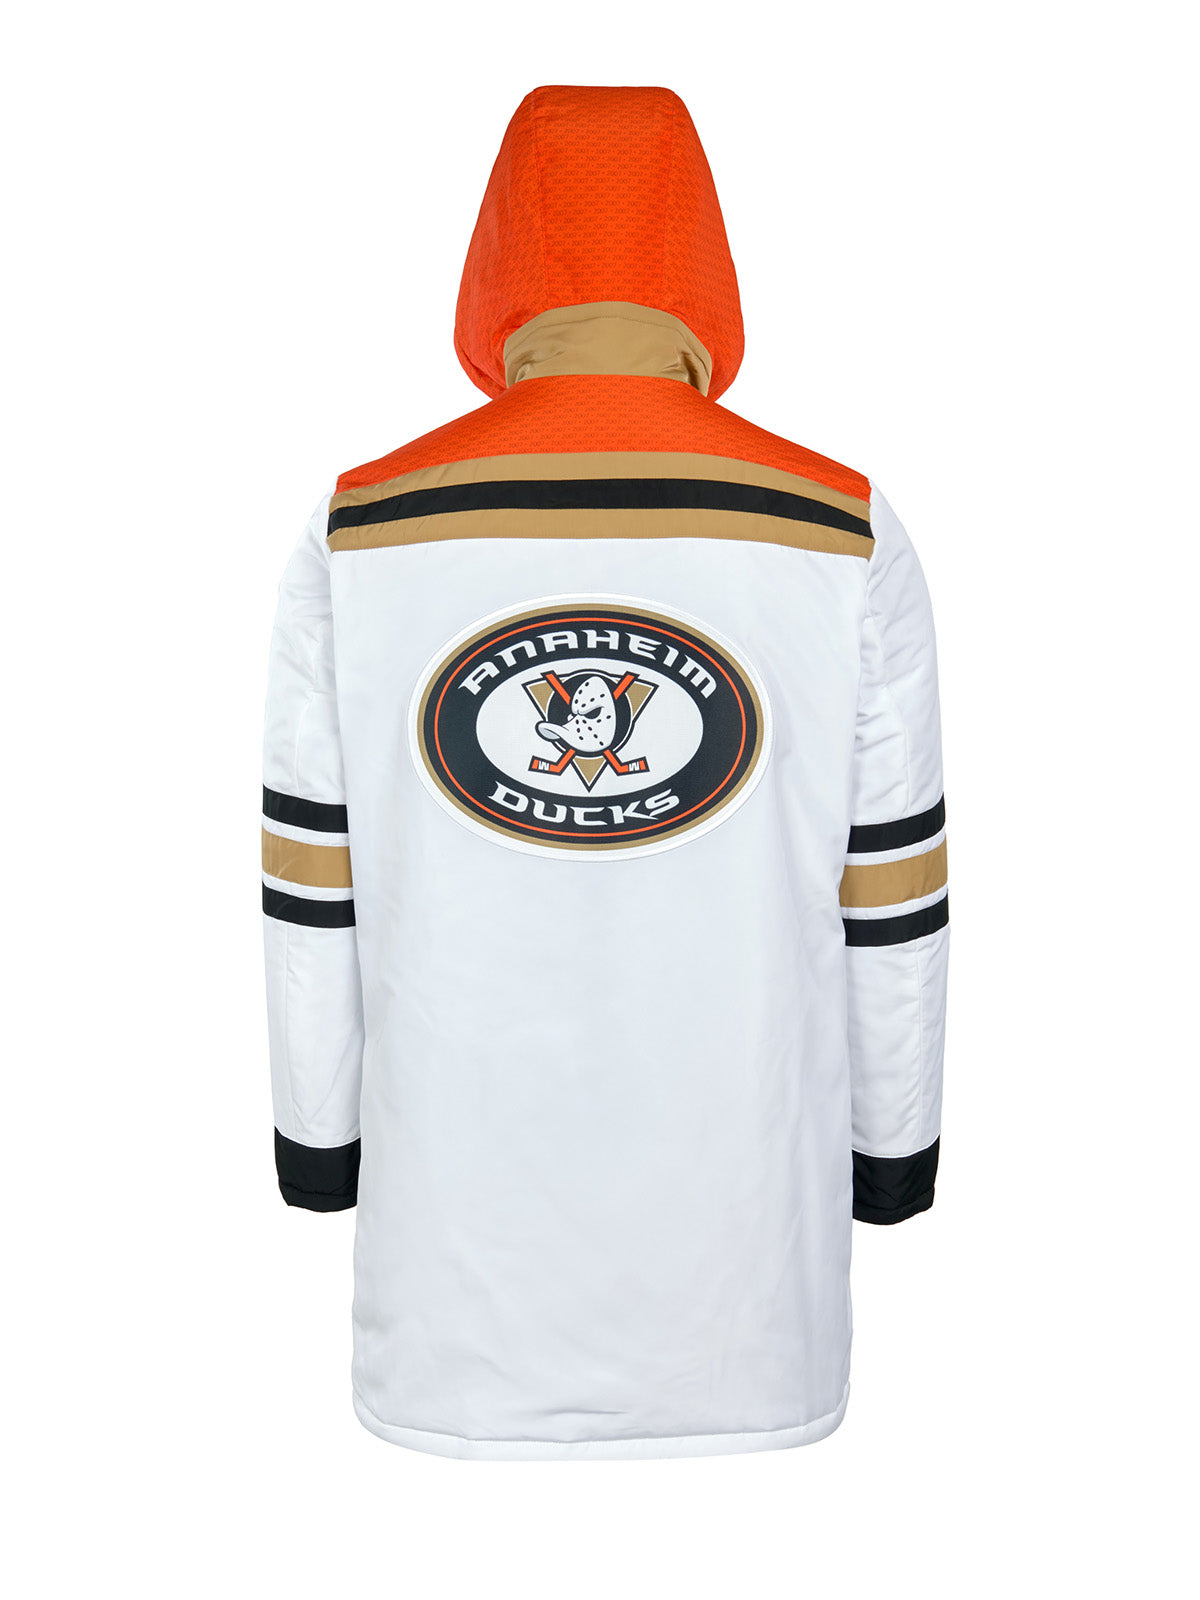 Anaheim Ducks Reversible Parka Jacket